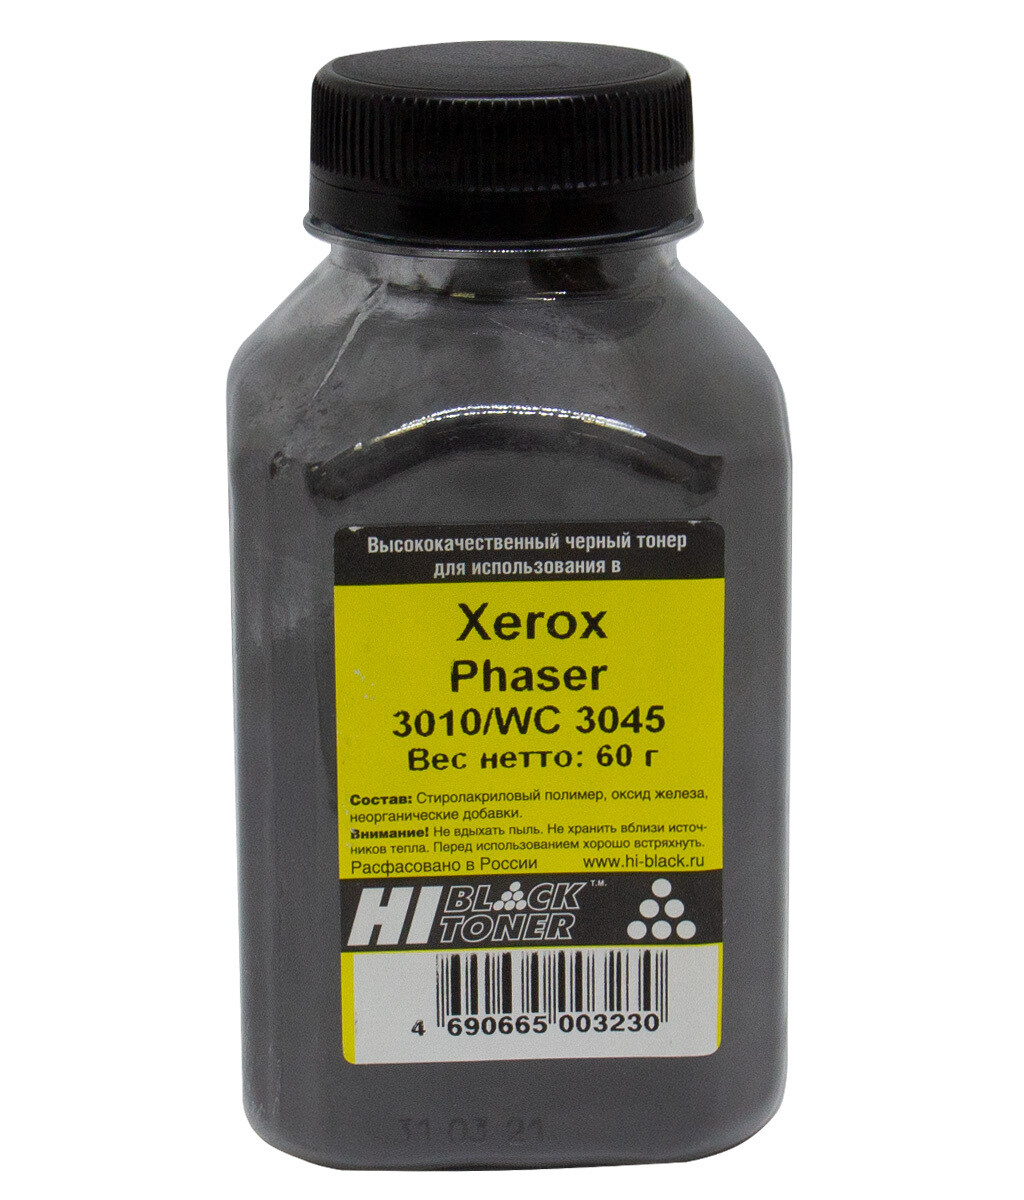 Тонер для Xerox Phaser 3010/WC 3045, Hi-Black , Bk, 60 г, банка.